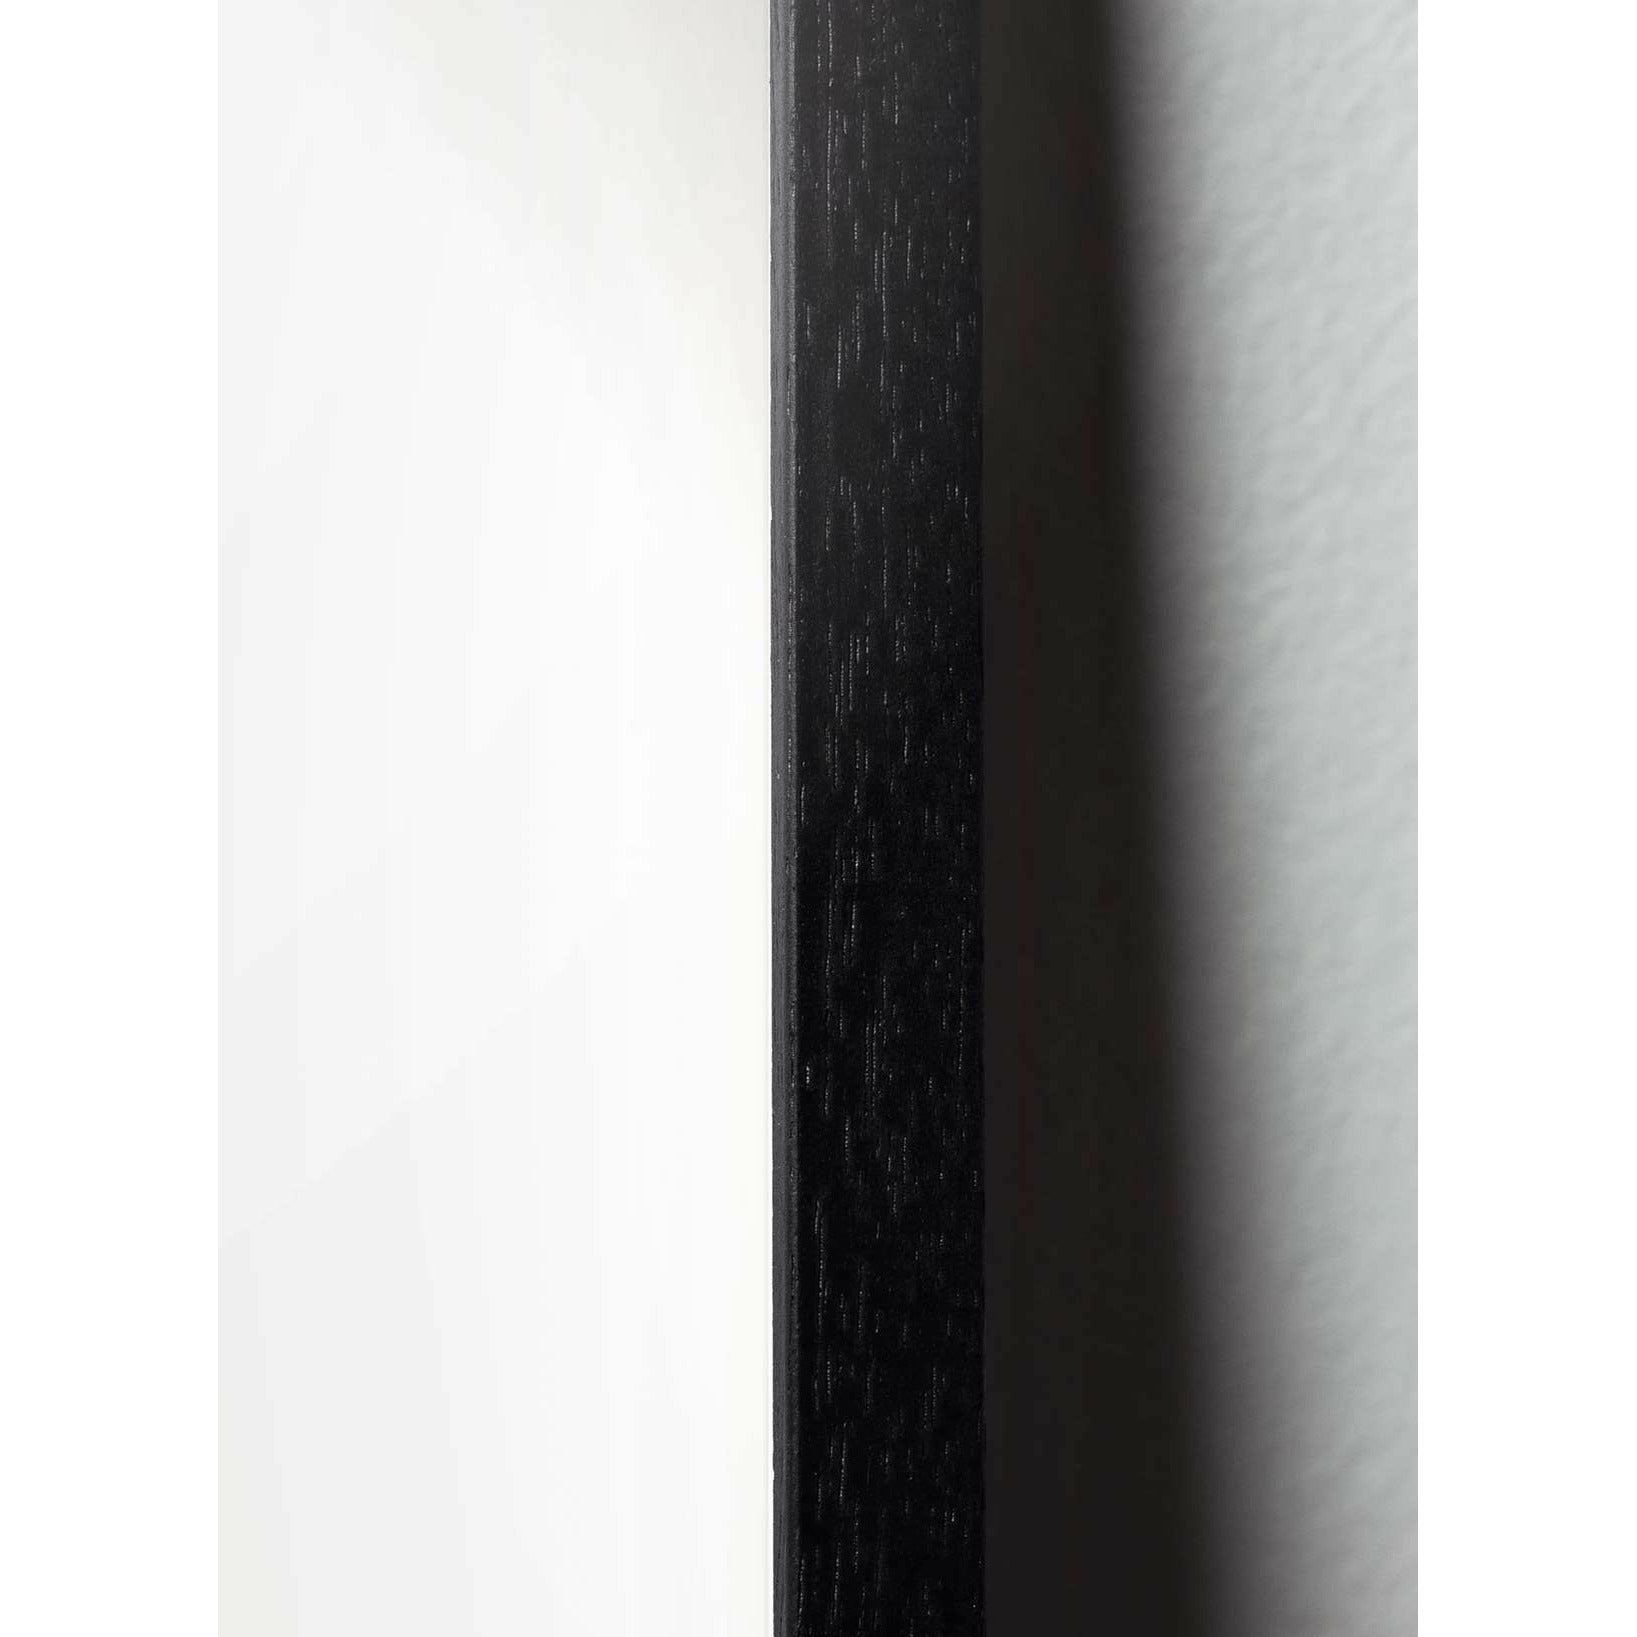 Póster de línea de cono de pino de creación, marco en madera lacada negra de 30x40 cm, fondo blanco